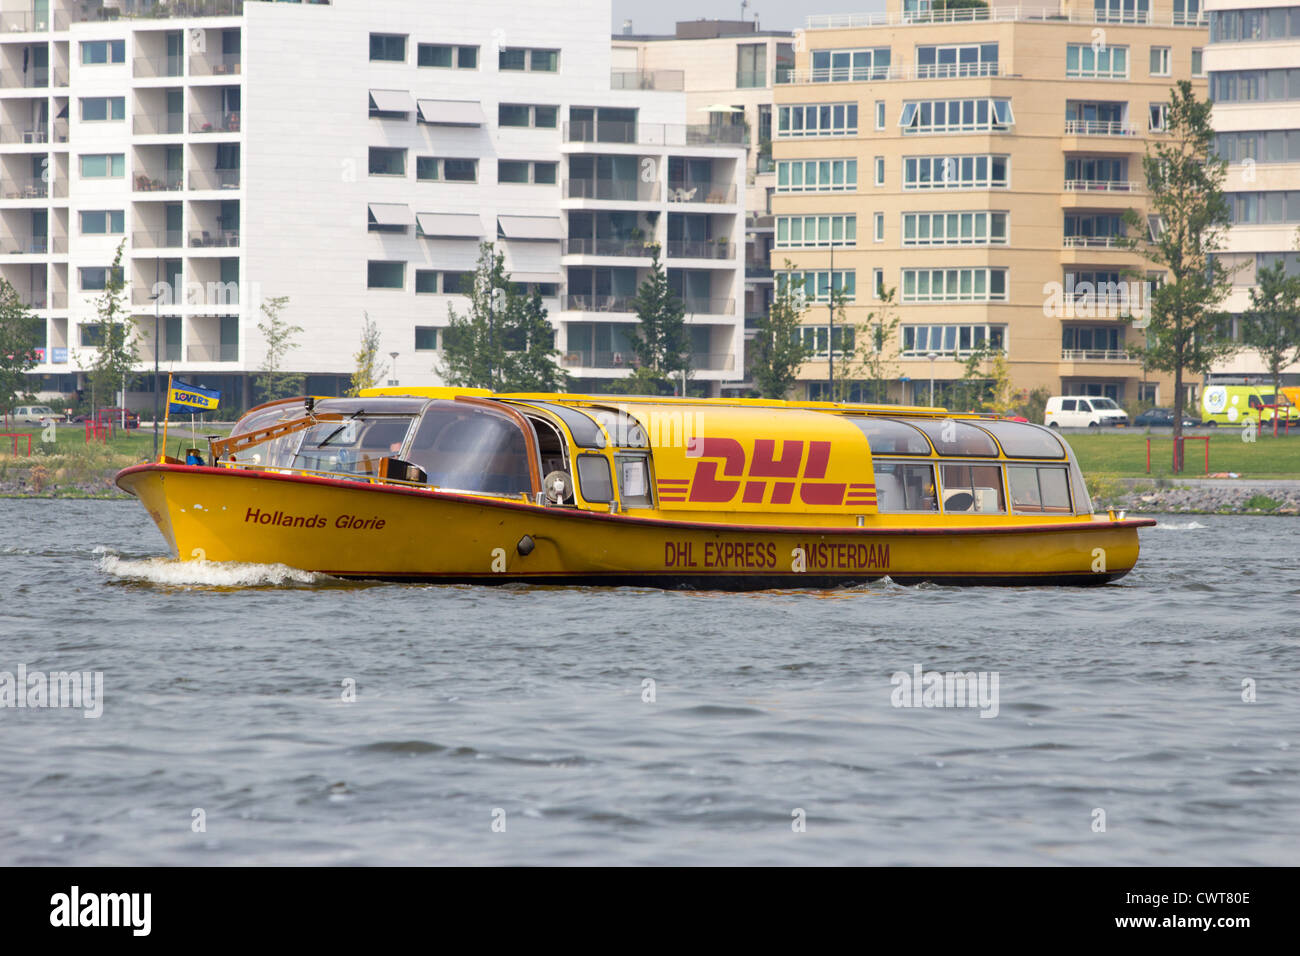 DHL Express Amsterdam boat Banque D'Images